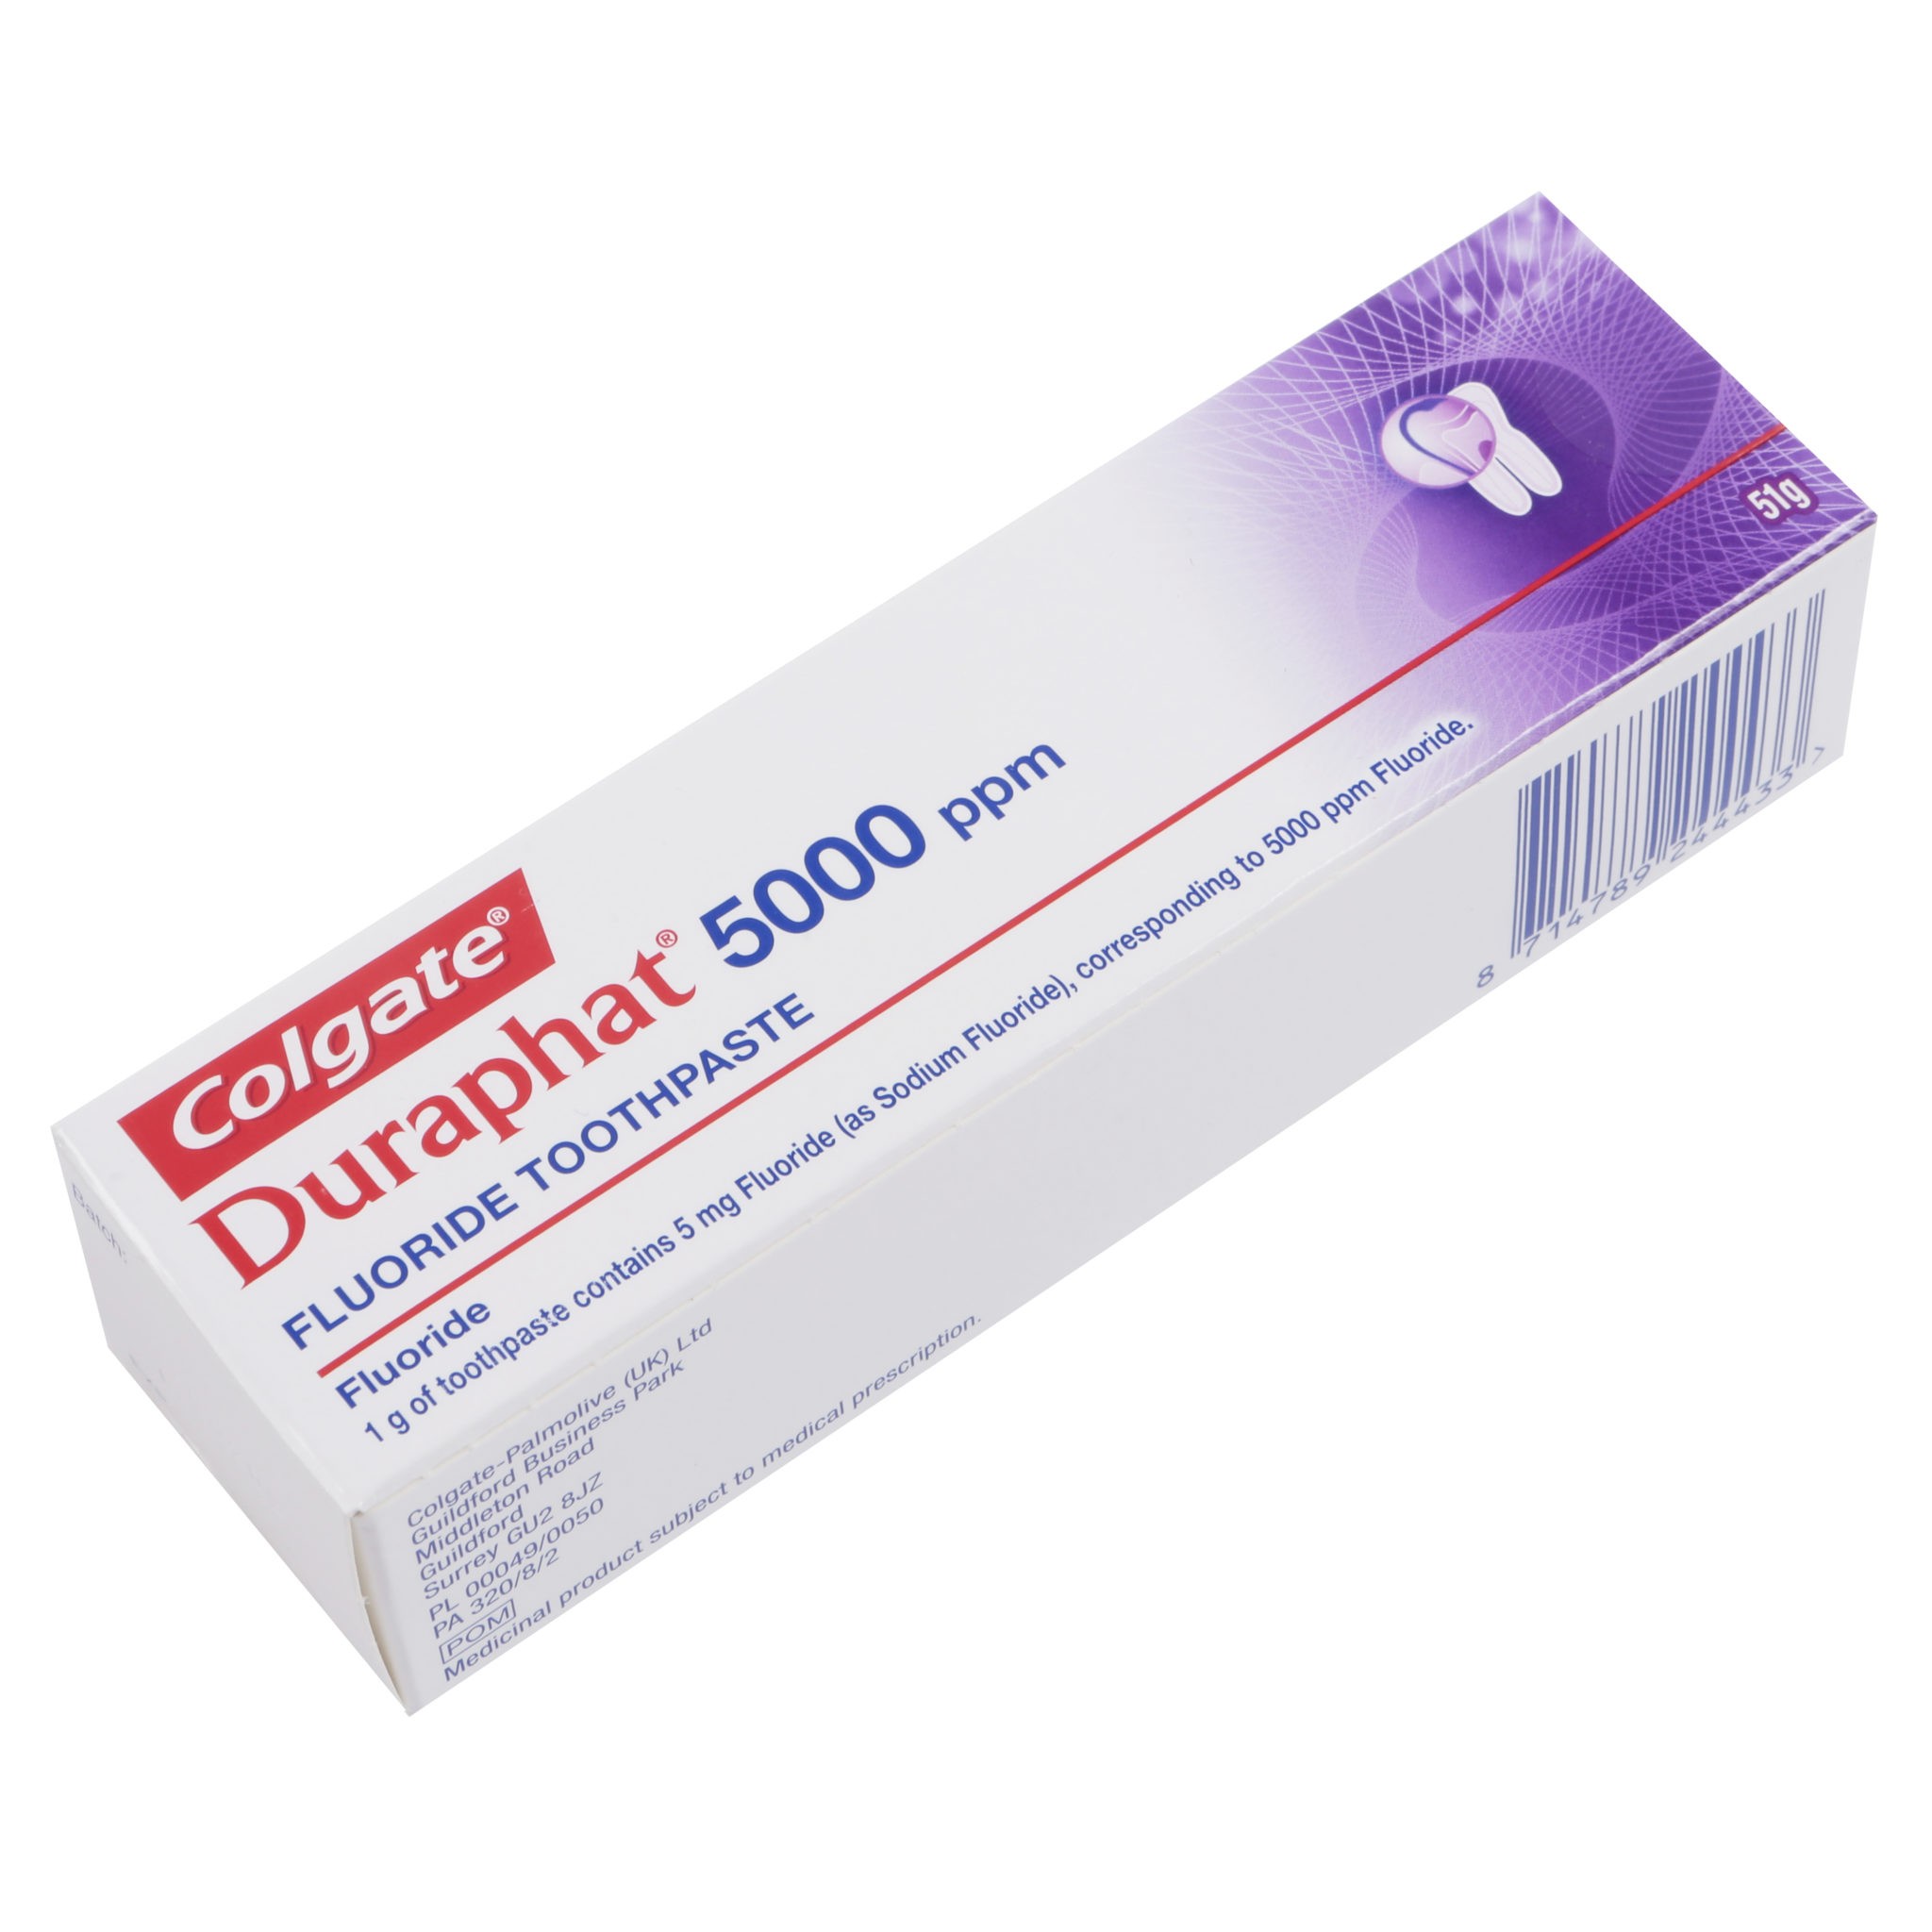 Colgate Duraphat 5000 Toothpaste (1 Pack)